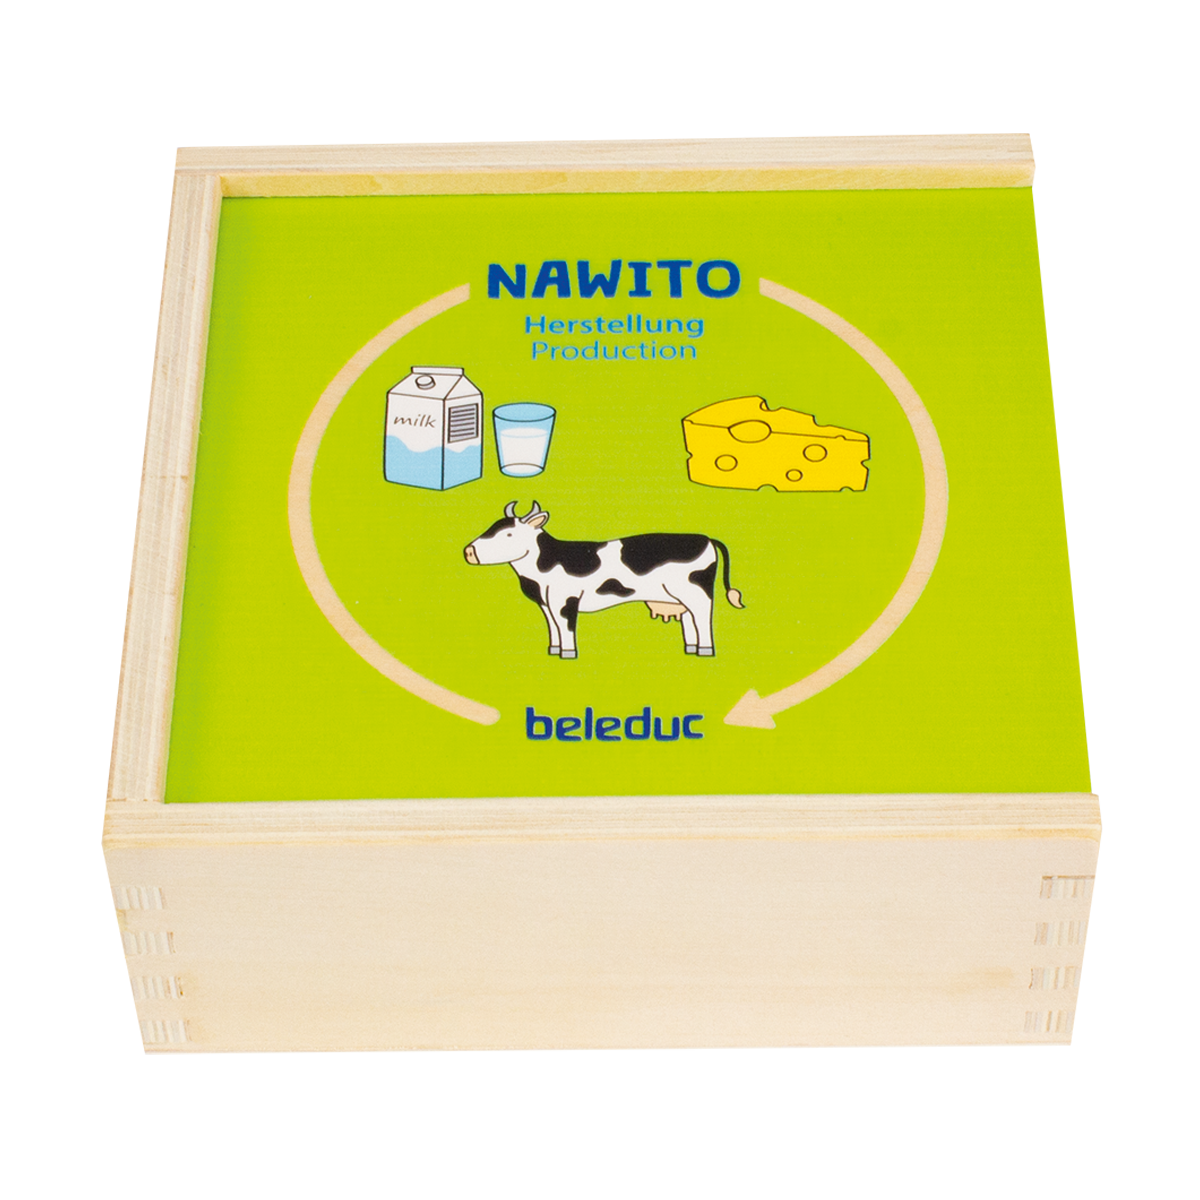 Beleduc Nawito Production Matching Puzzle 產品加工過程配對拼圖